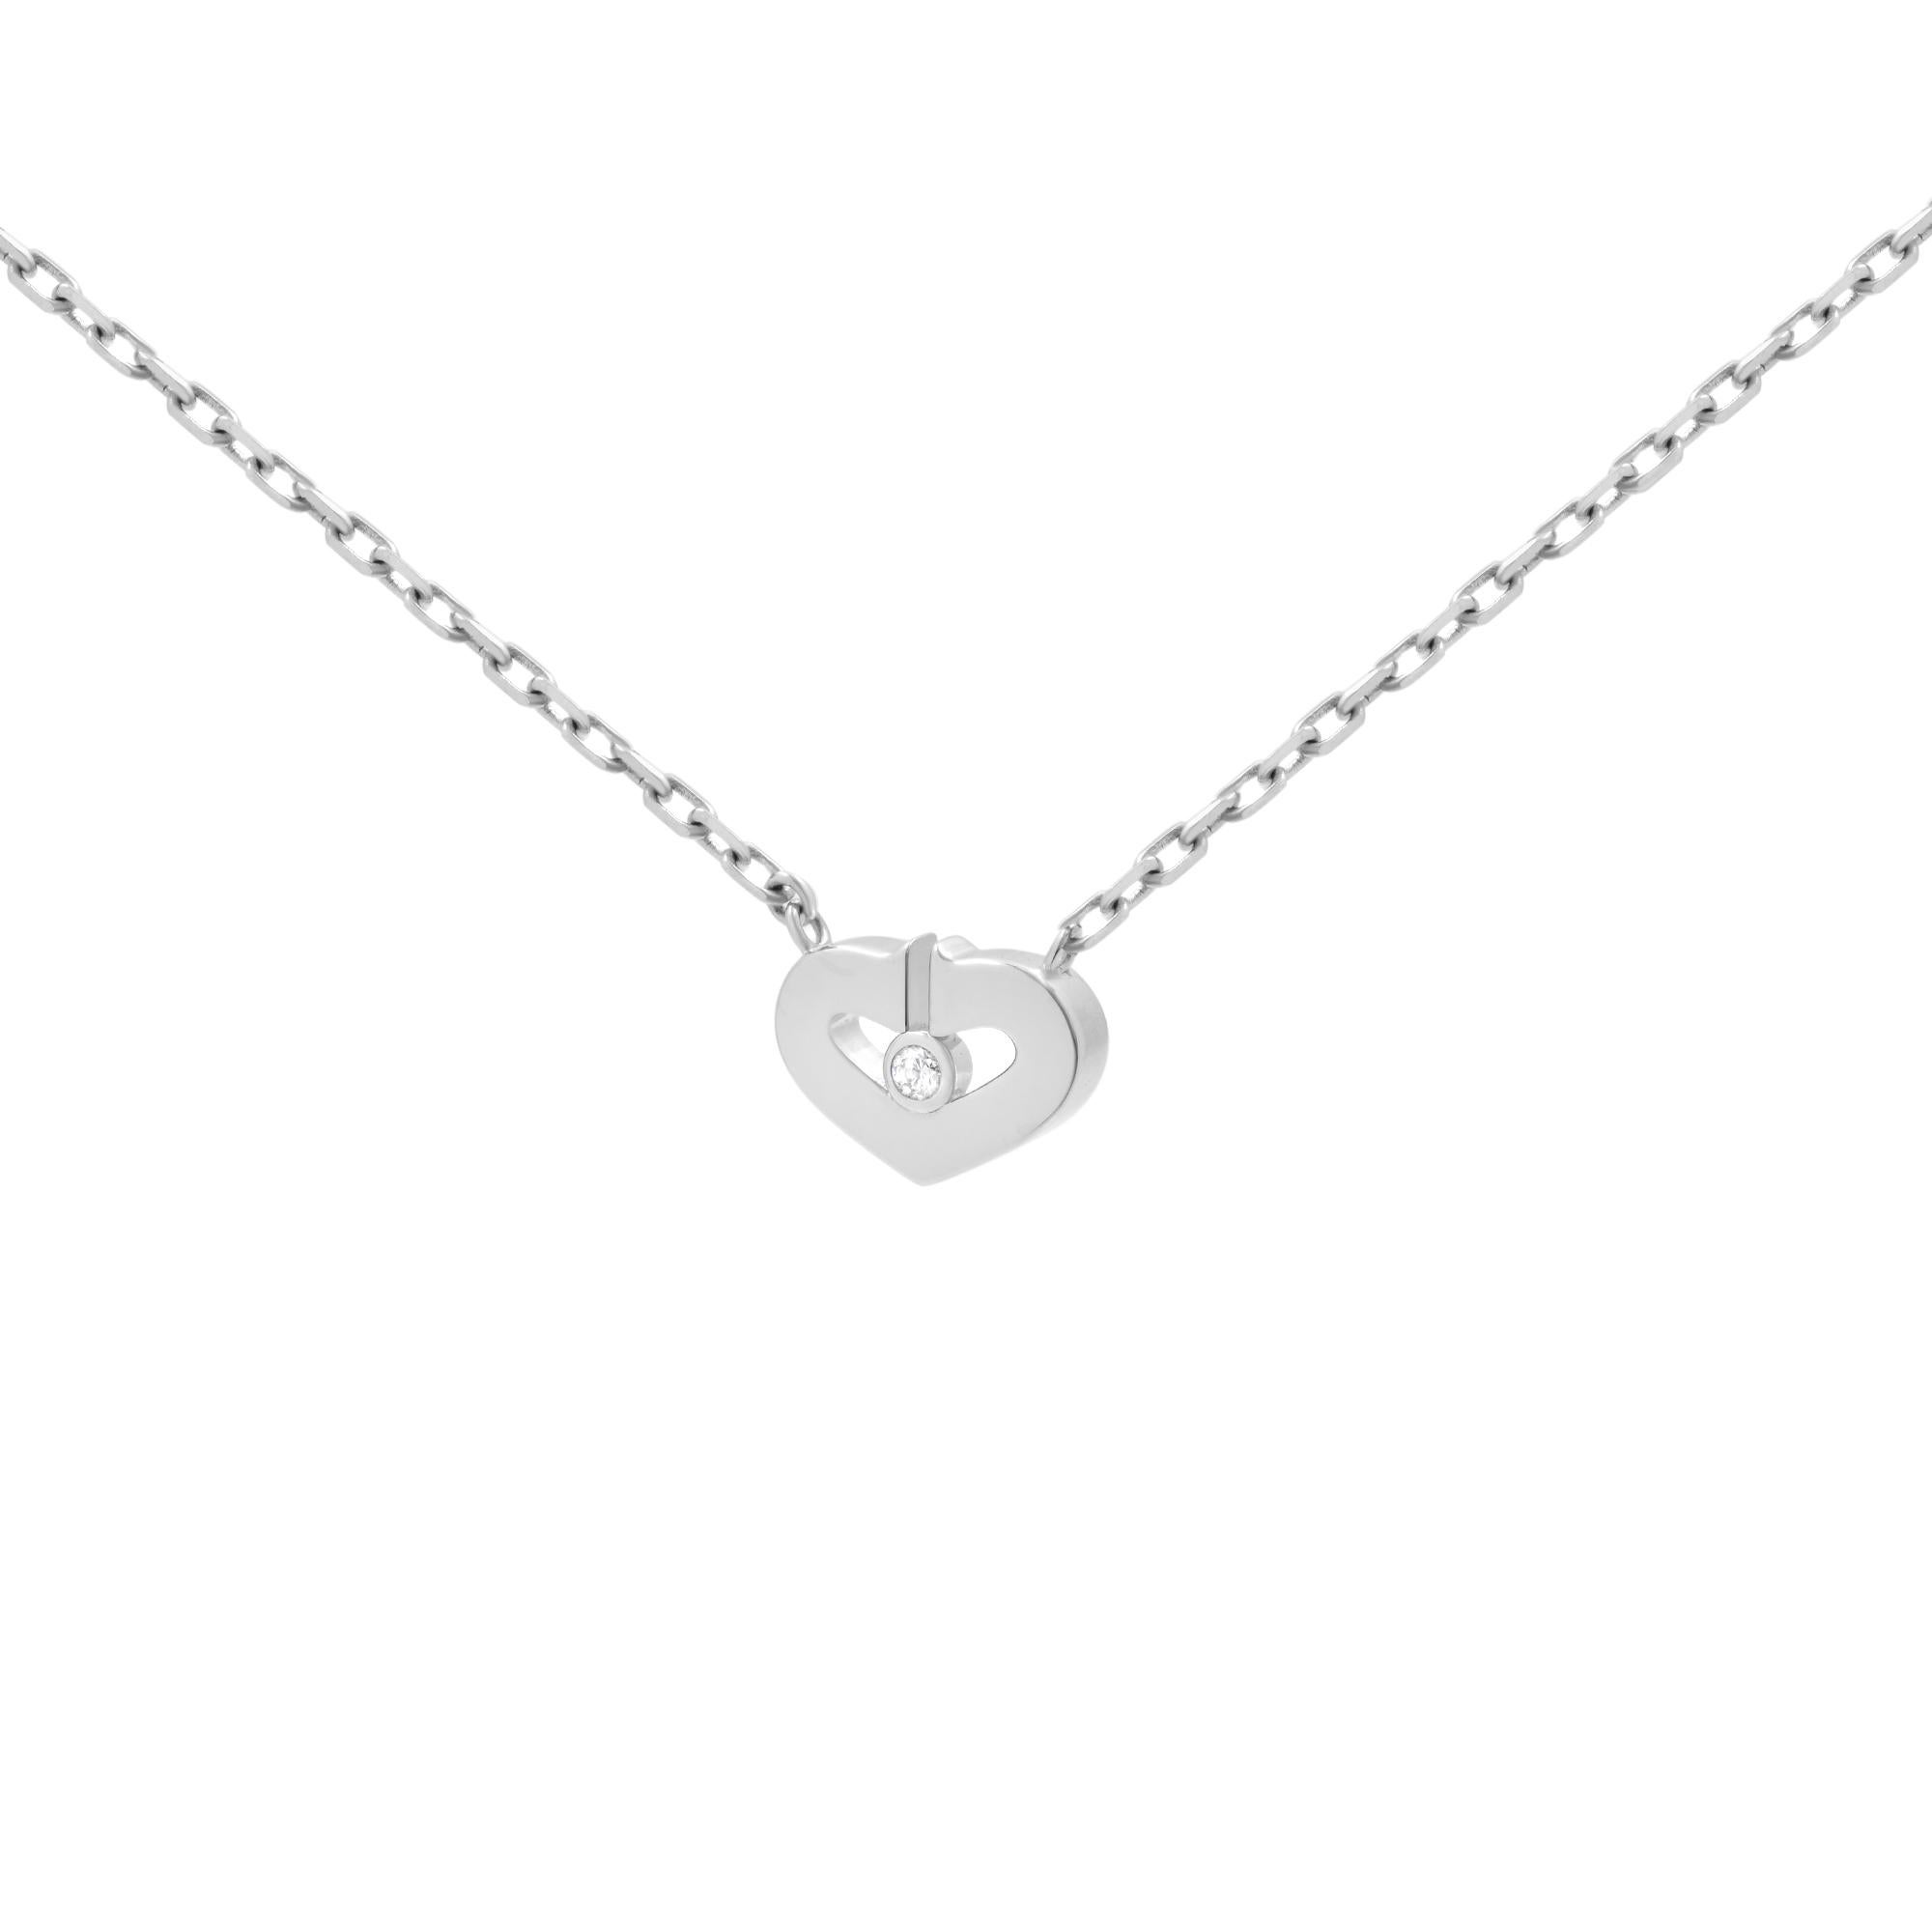 Modern Cartier C Heart Diamond Pendant Necklace 18k White Gold 0.02cttw